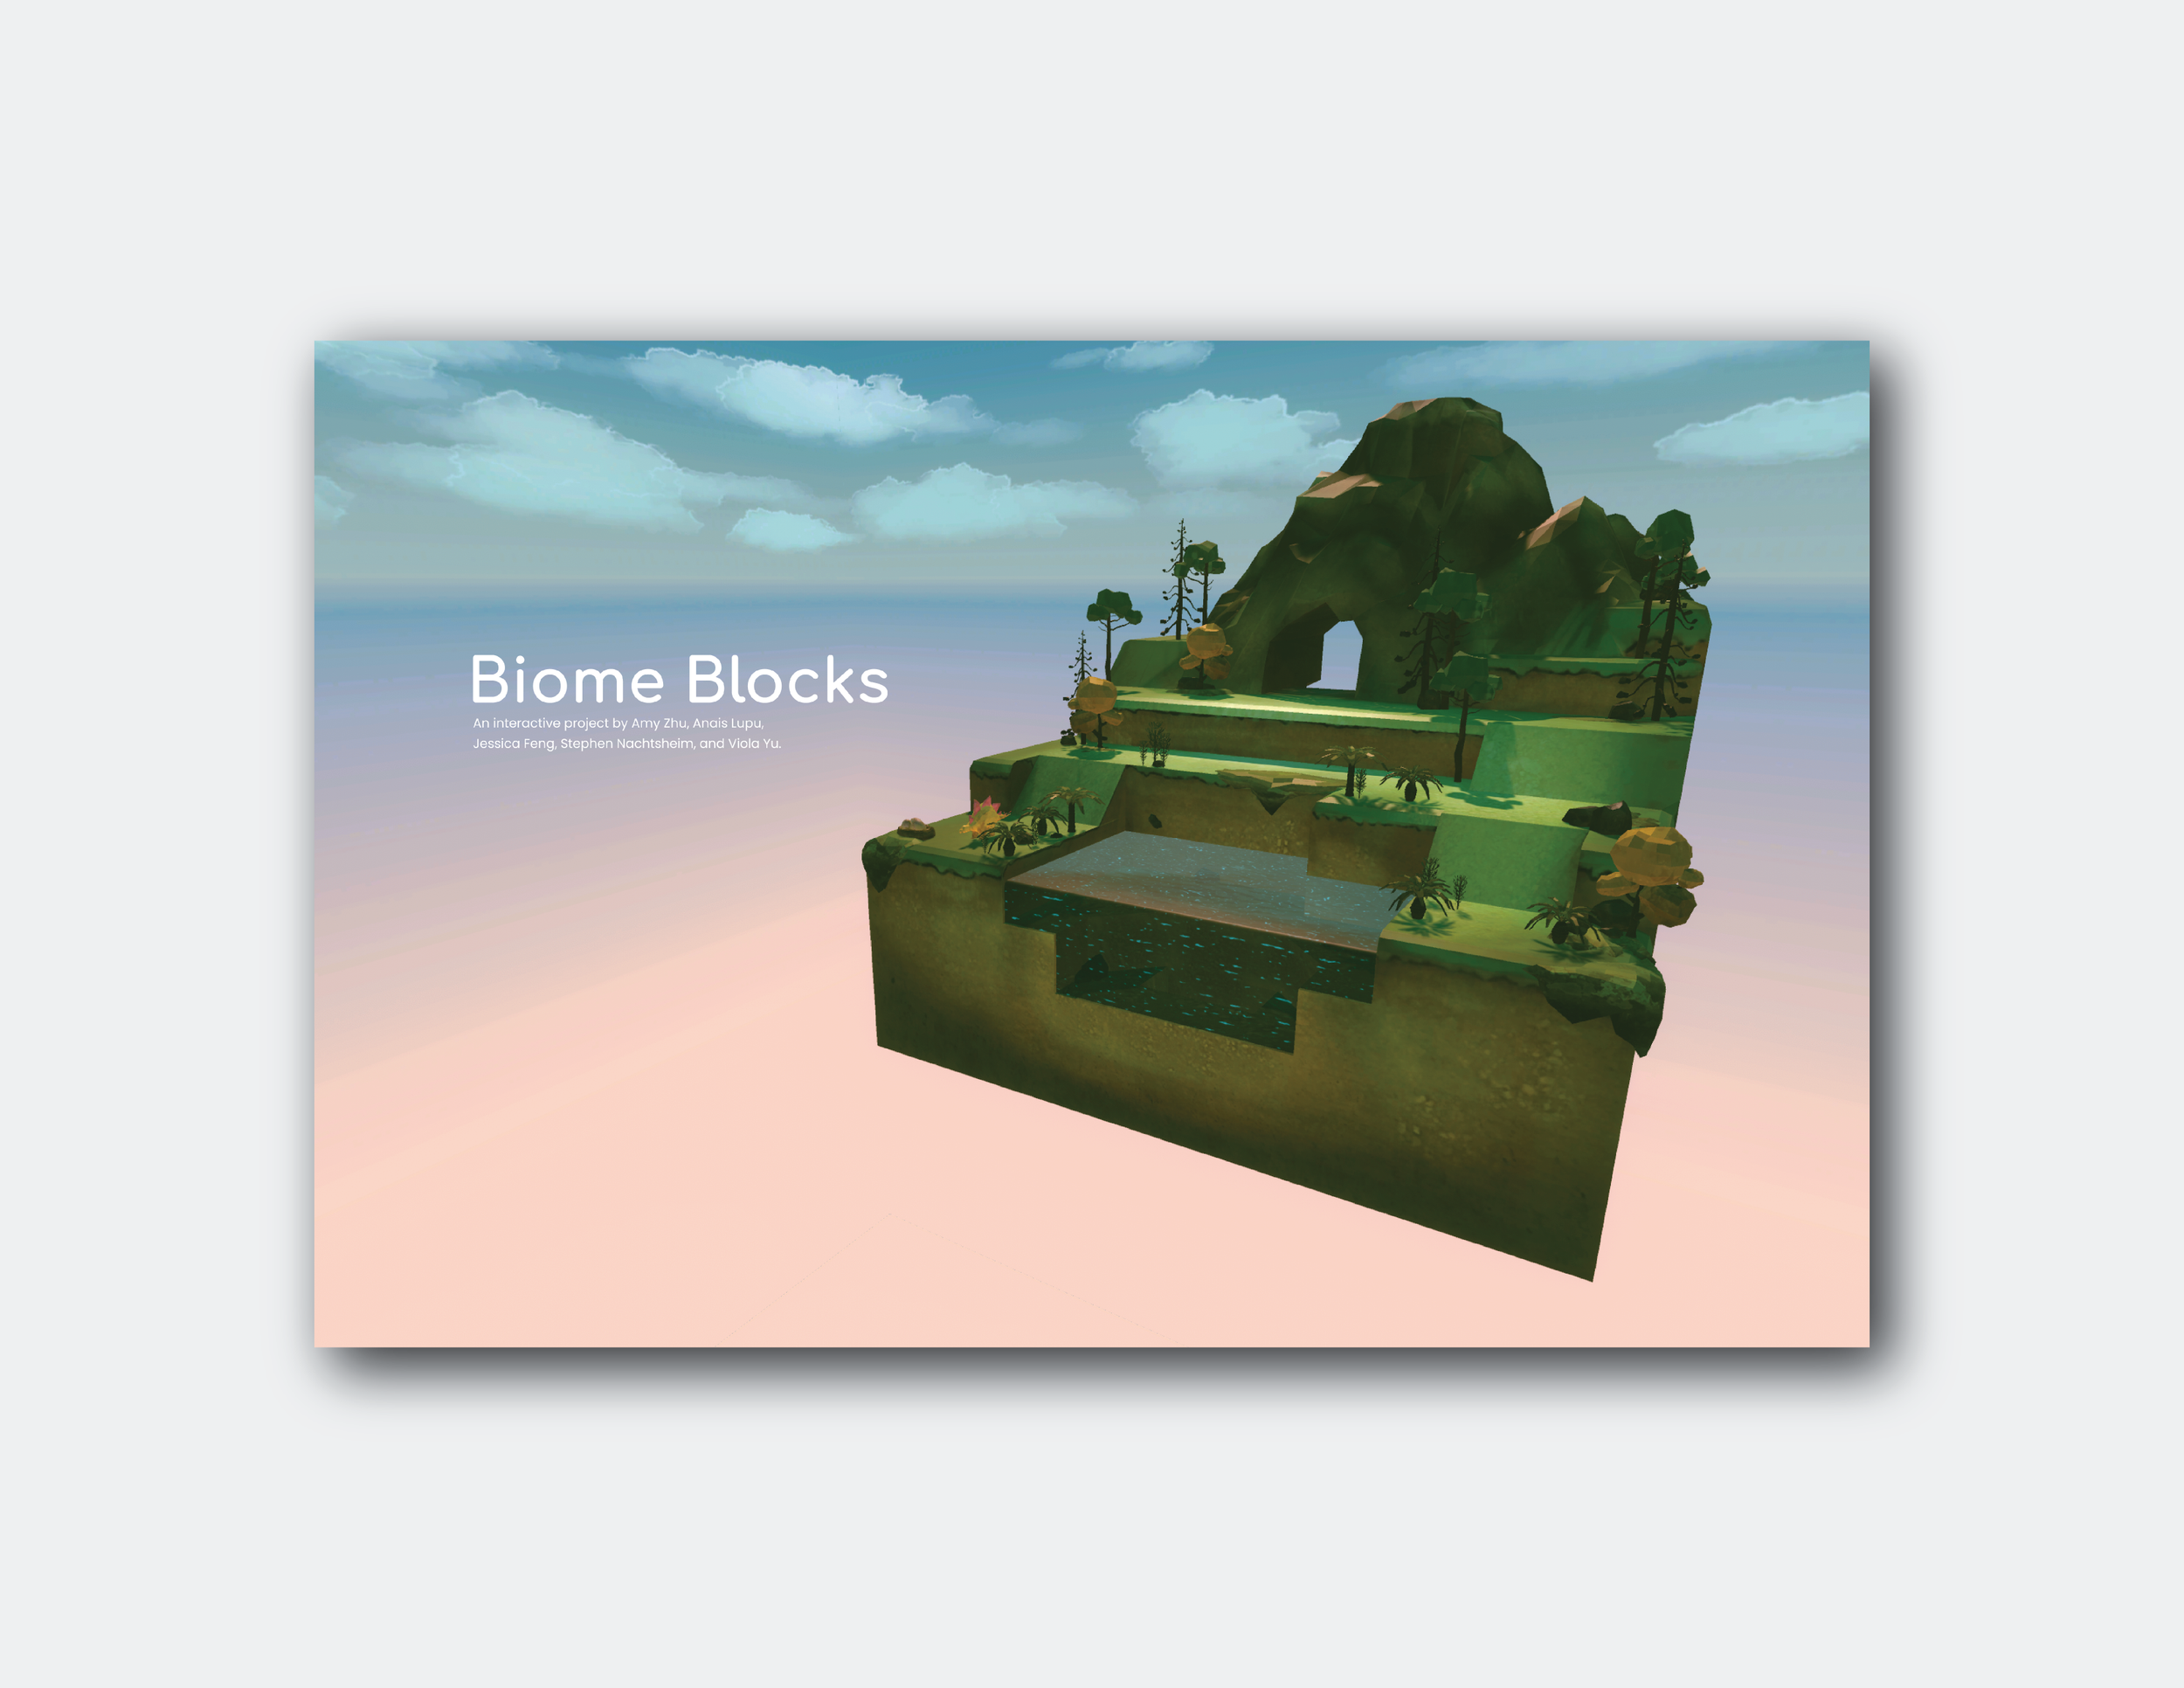 Biome Blocks